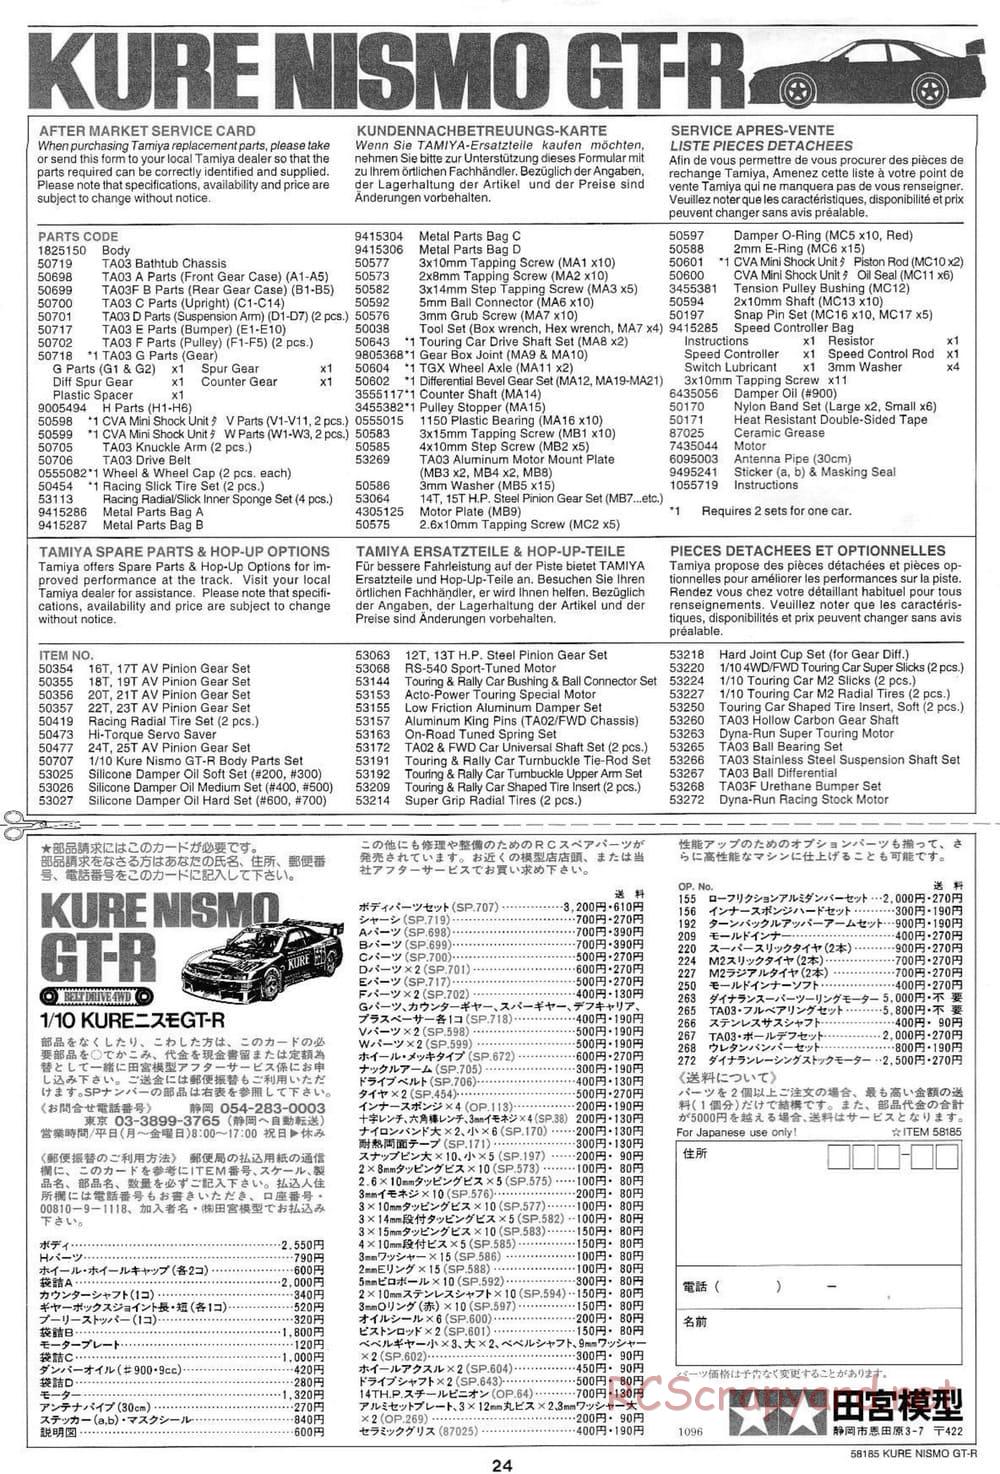 Tamiya - Kure Nismo GT-R - TA-03F Chassis - Manual - Page 24